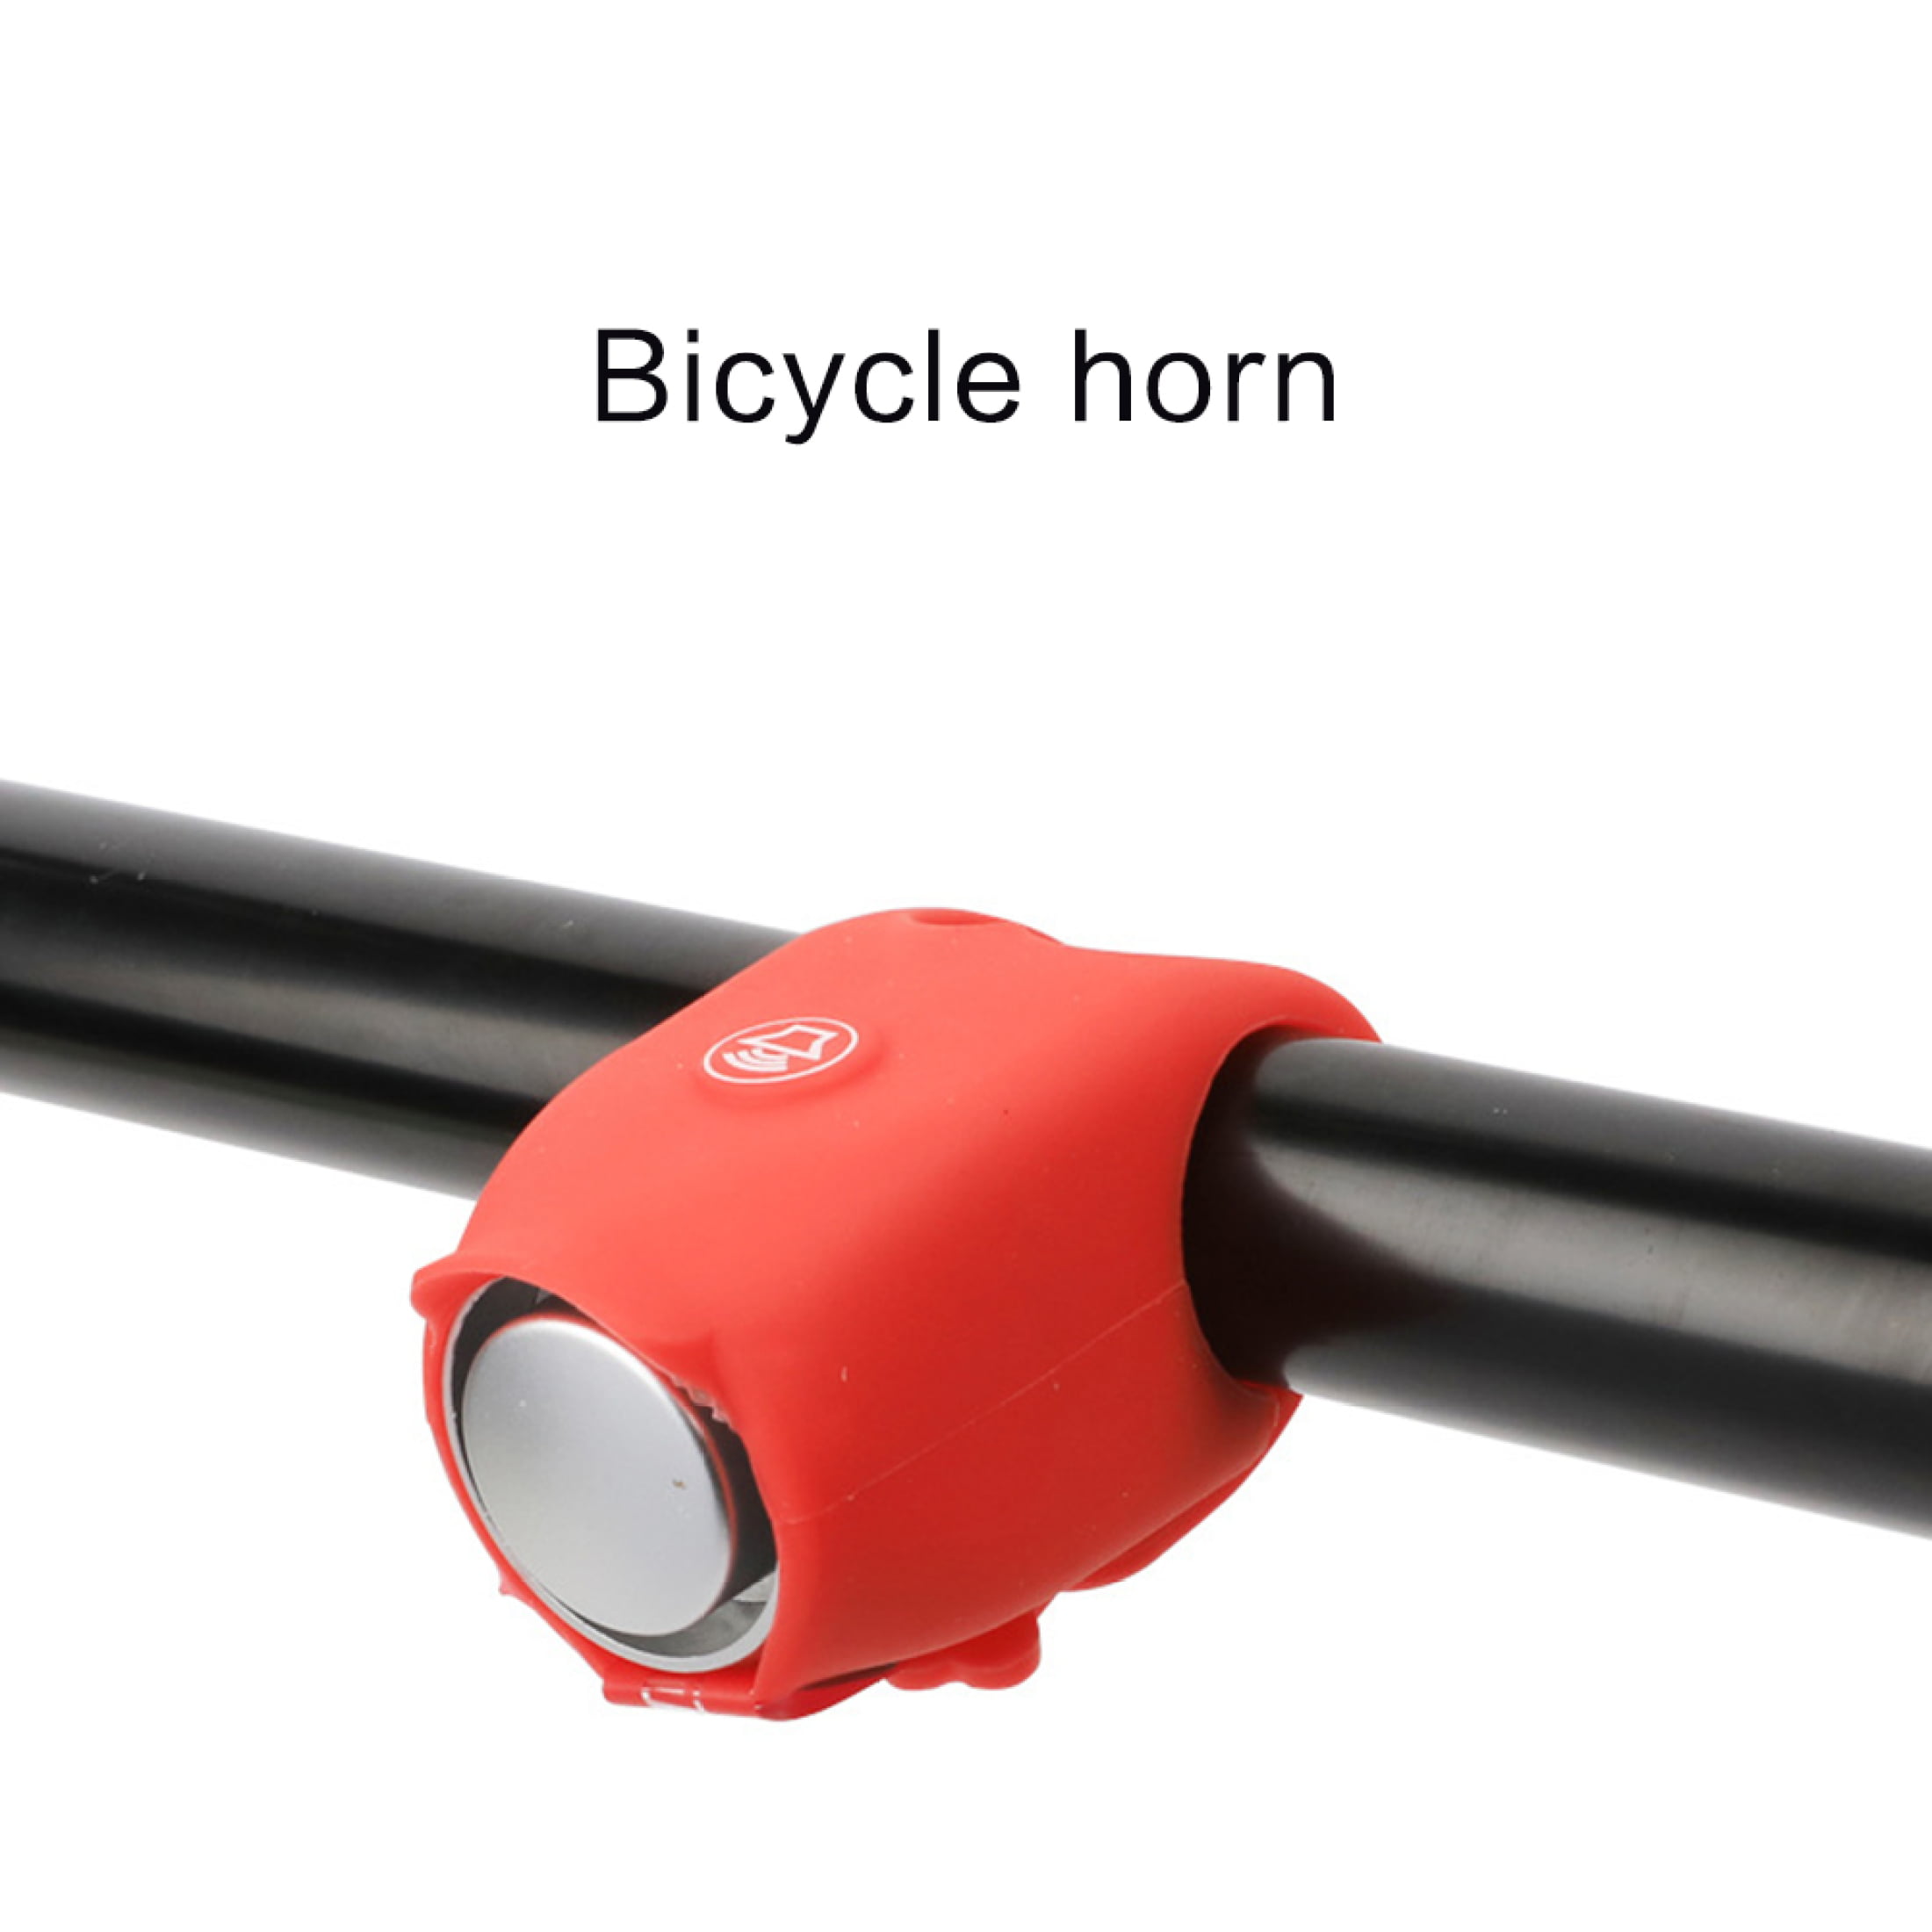 NAMINA 2021 Super Bike Horn 120 db Bike Electronic Horn, Super